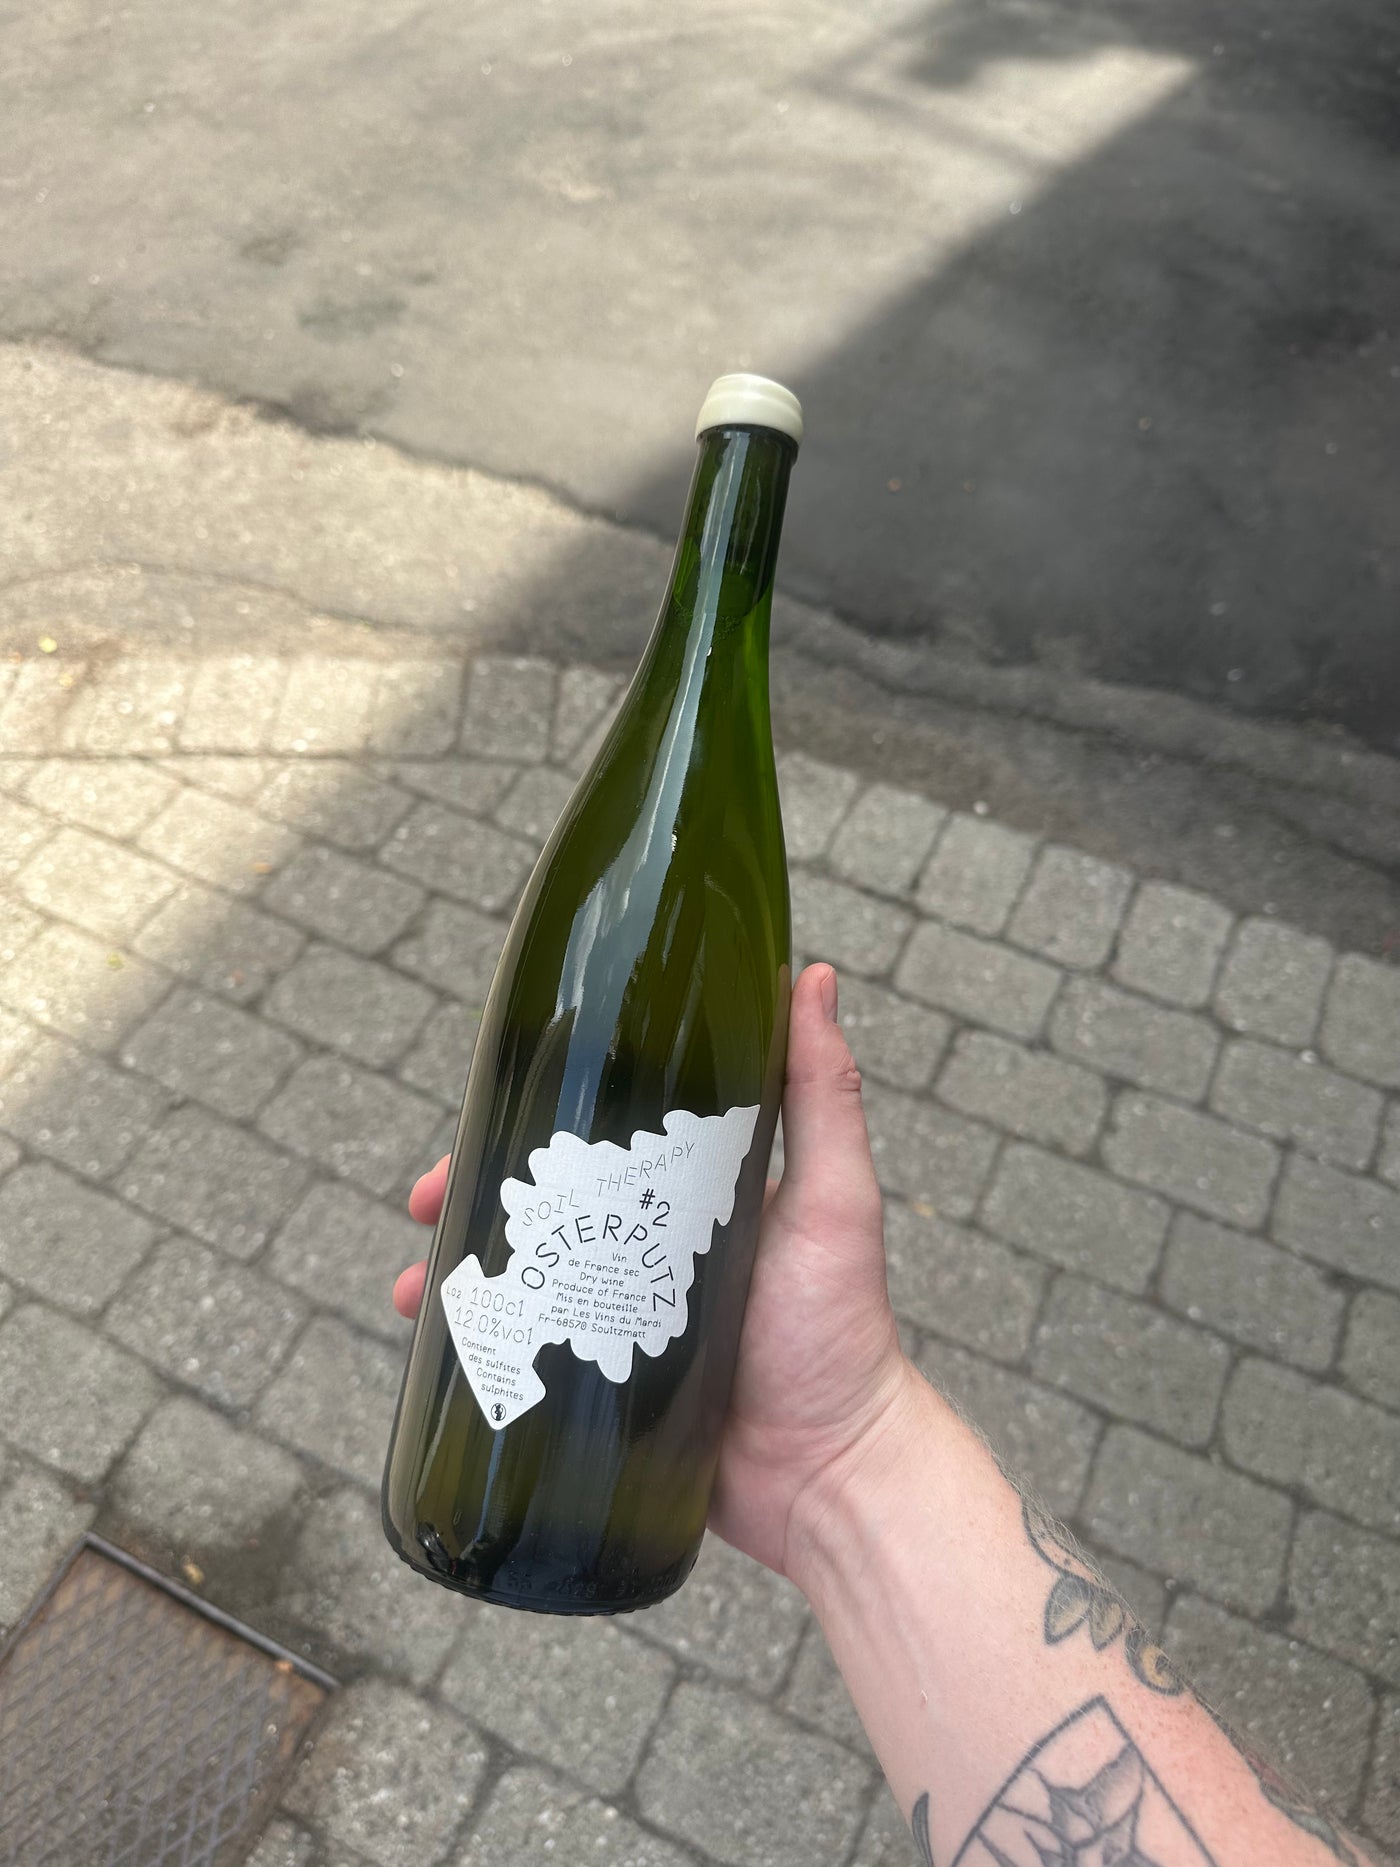 Les Vins du Mardi - Osterputz (1 liter) '22